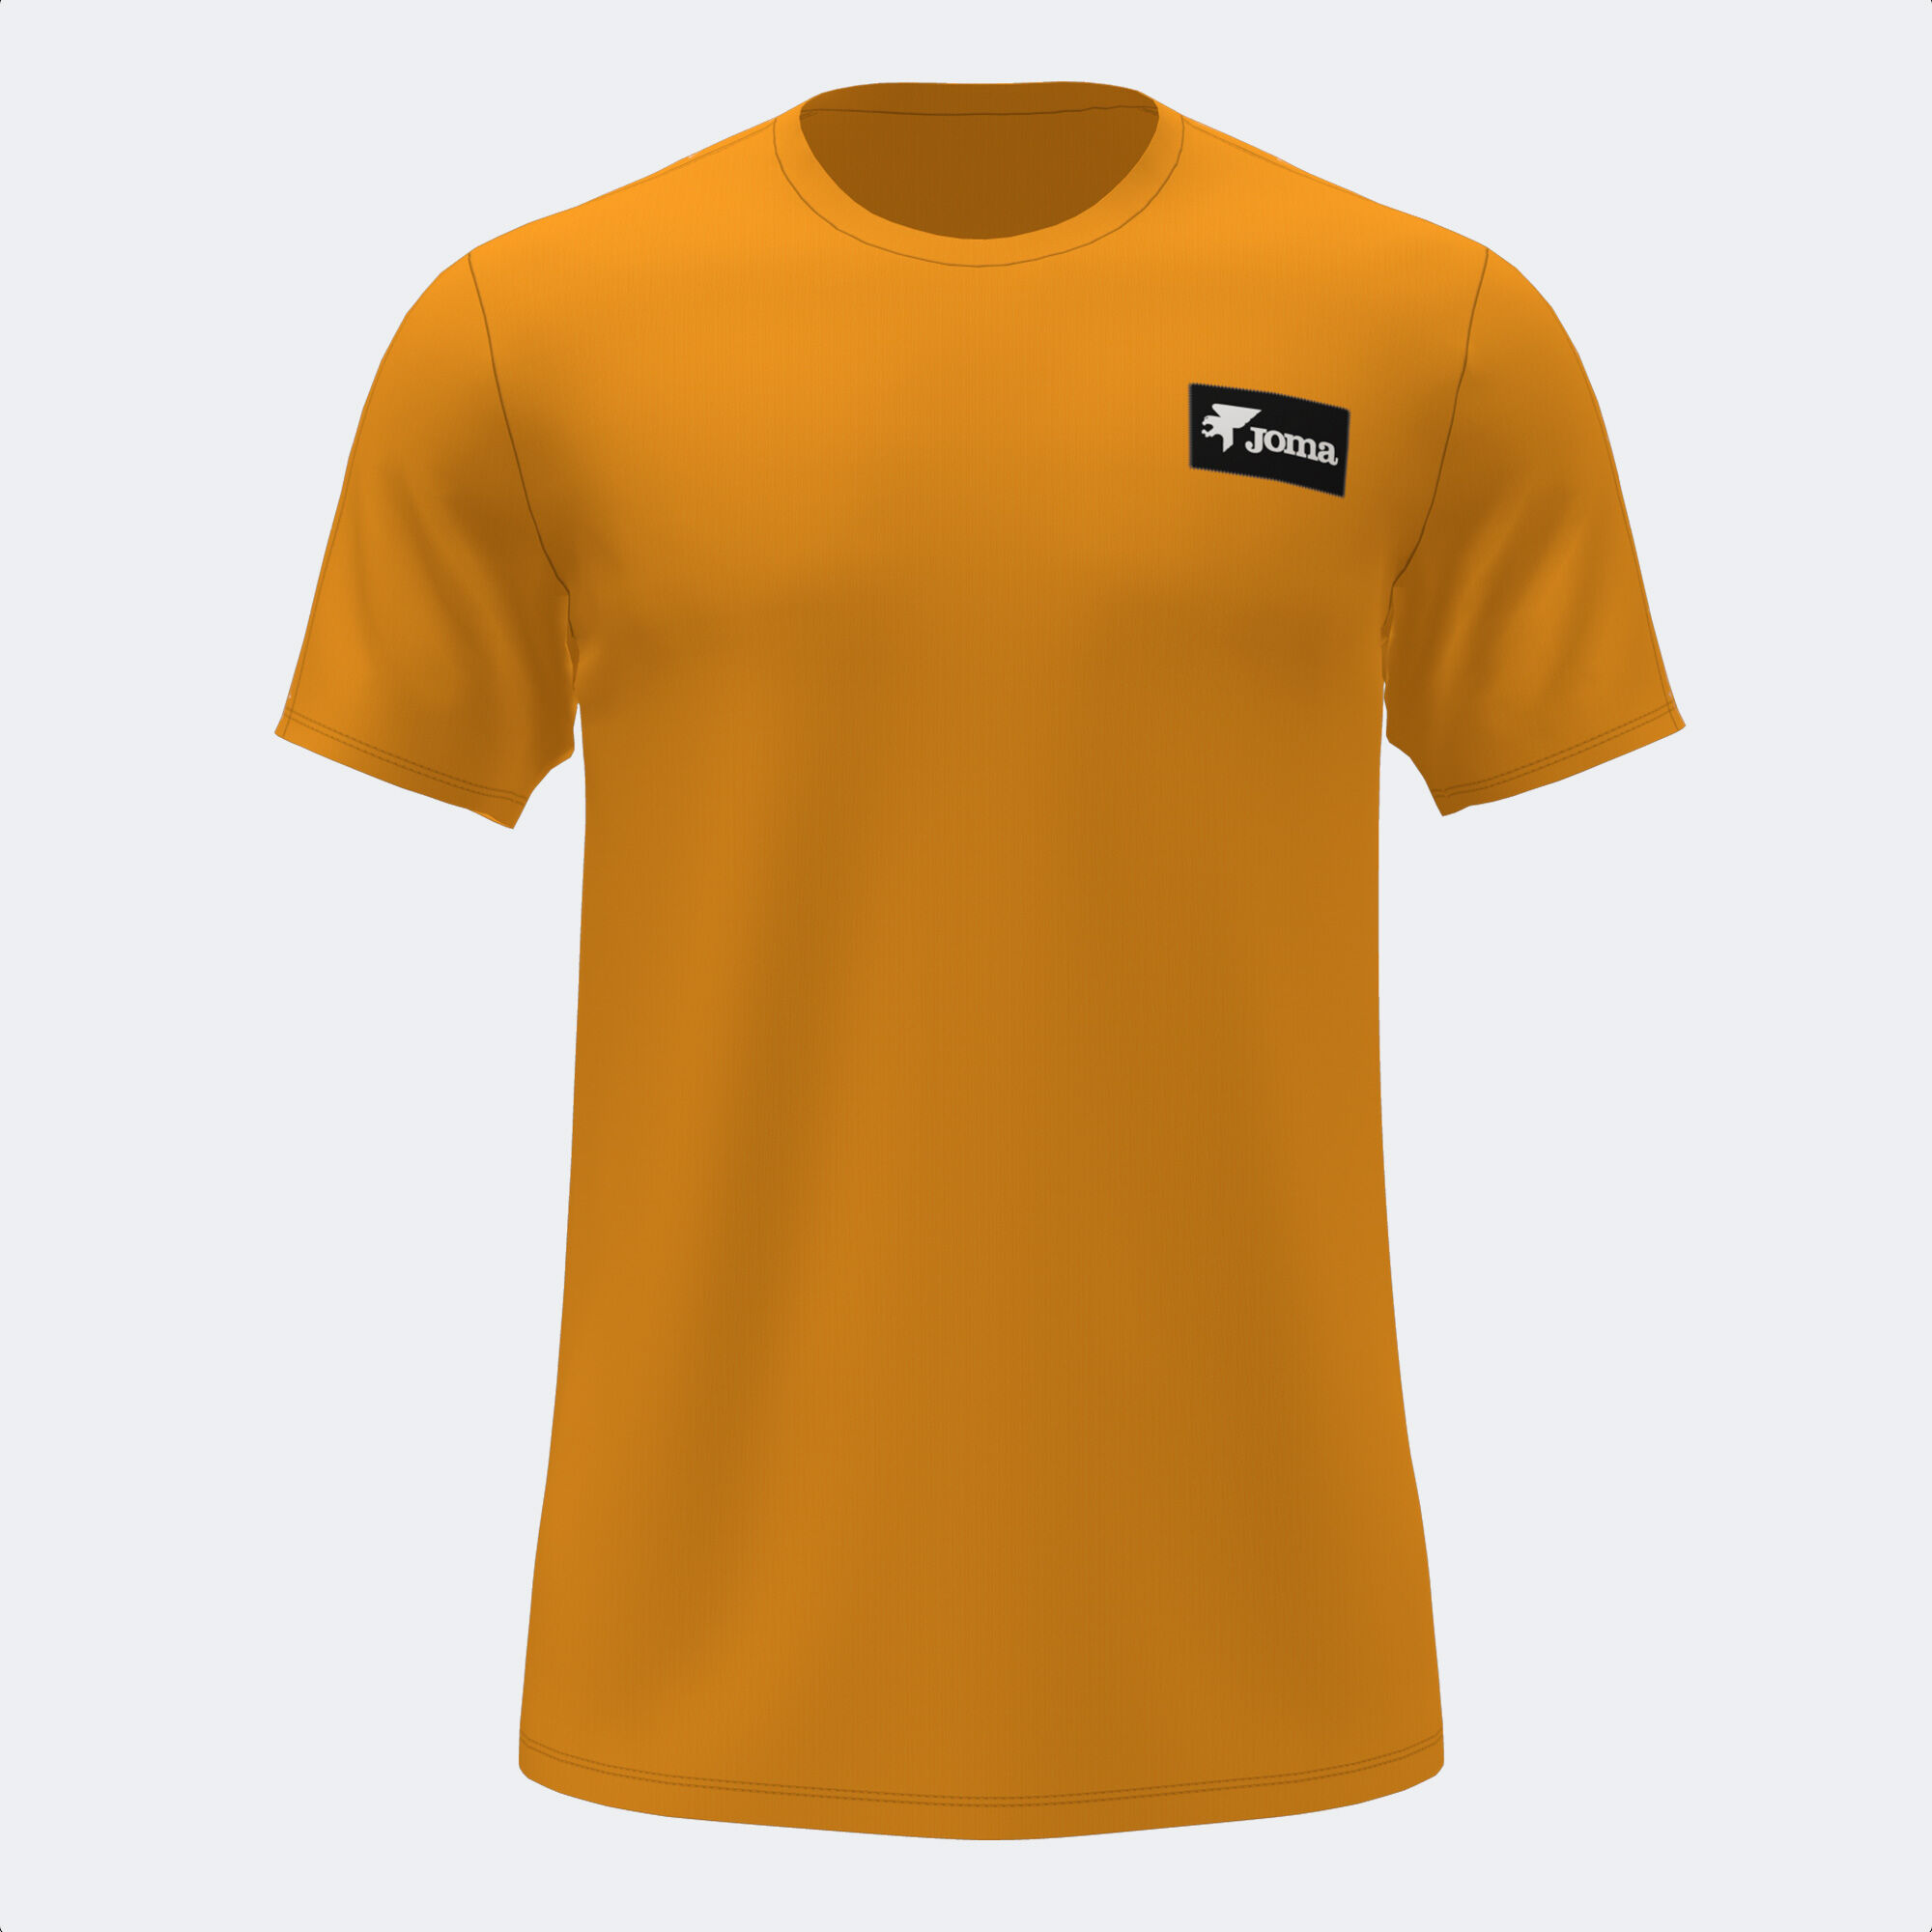 T-shirt manga curta homem California laranja